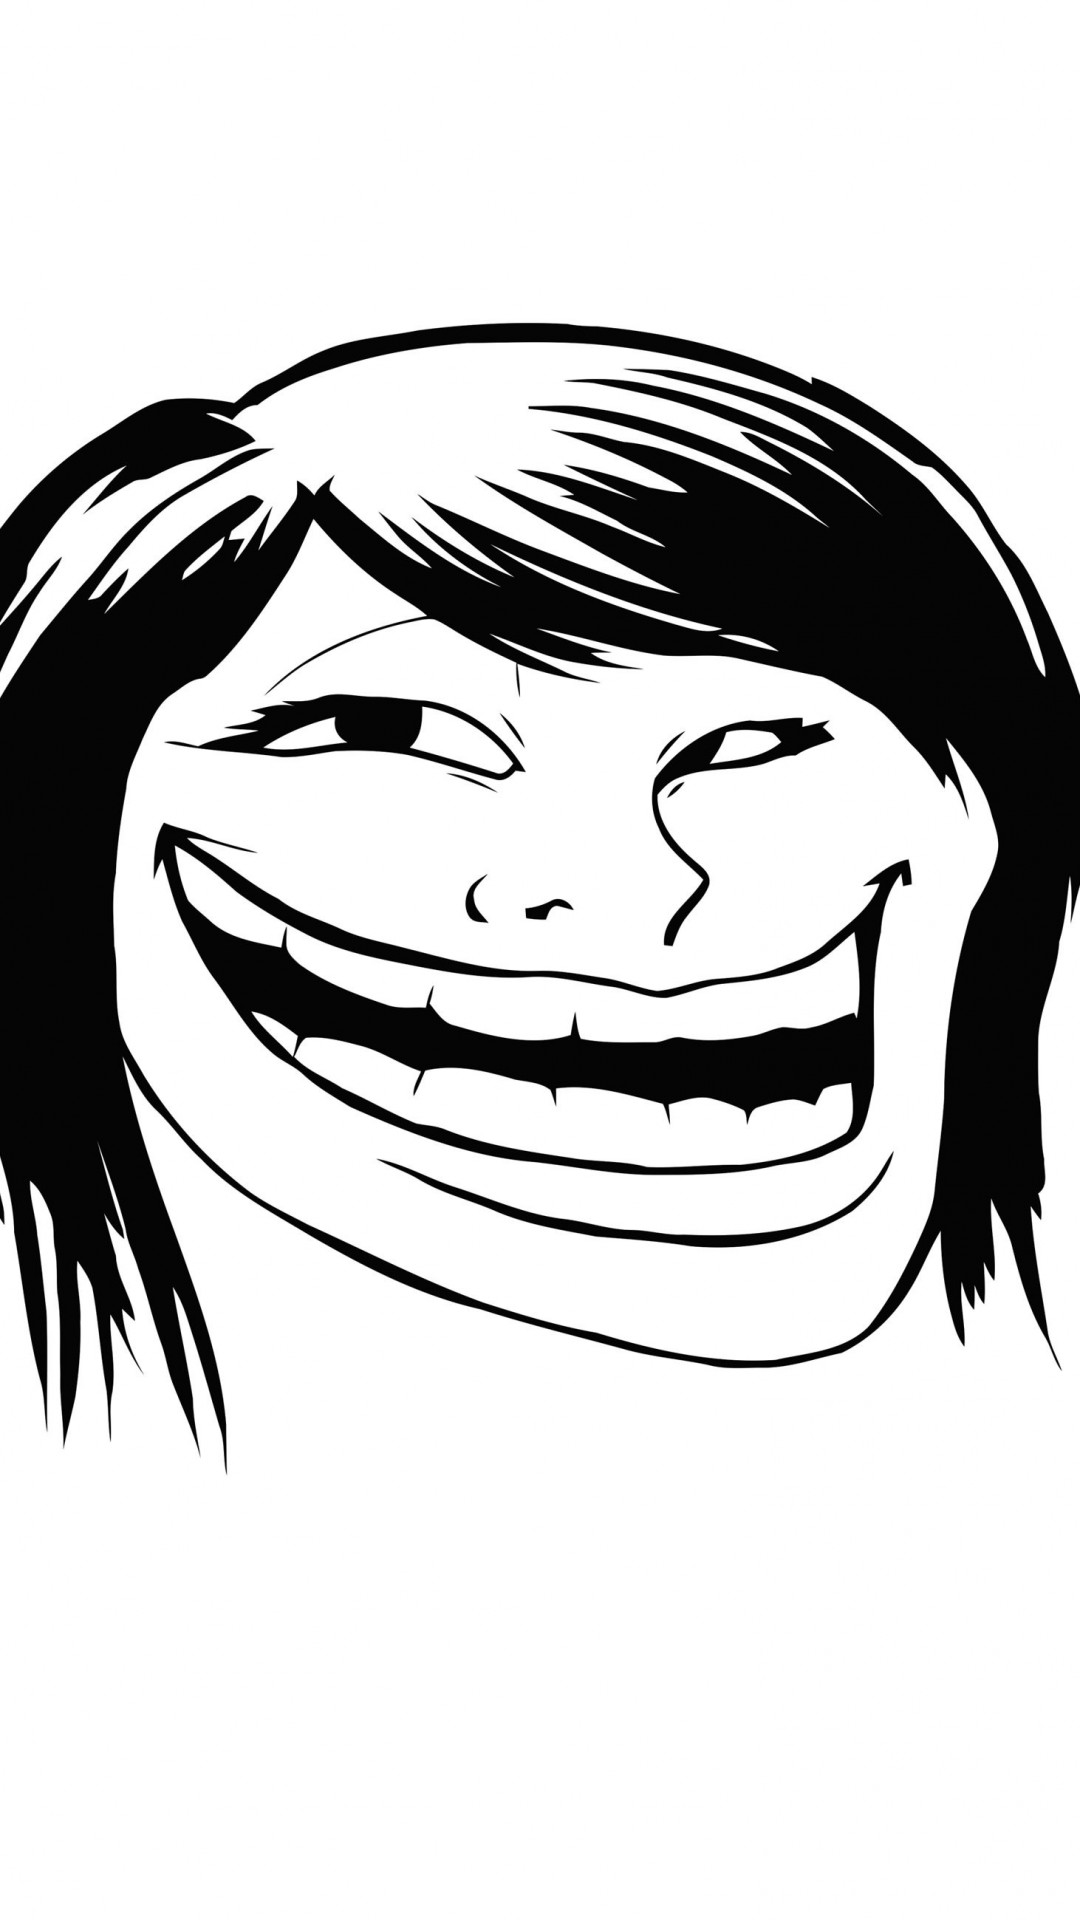 Female Troll Face Meme Wallpaper for SAMSUNG Galaxy S4